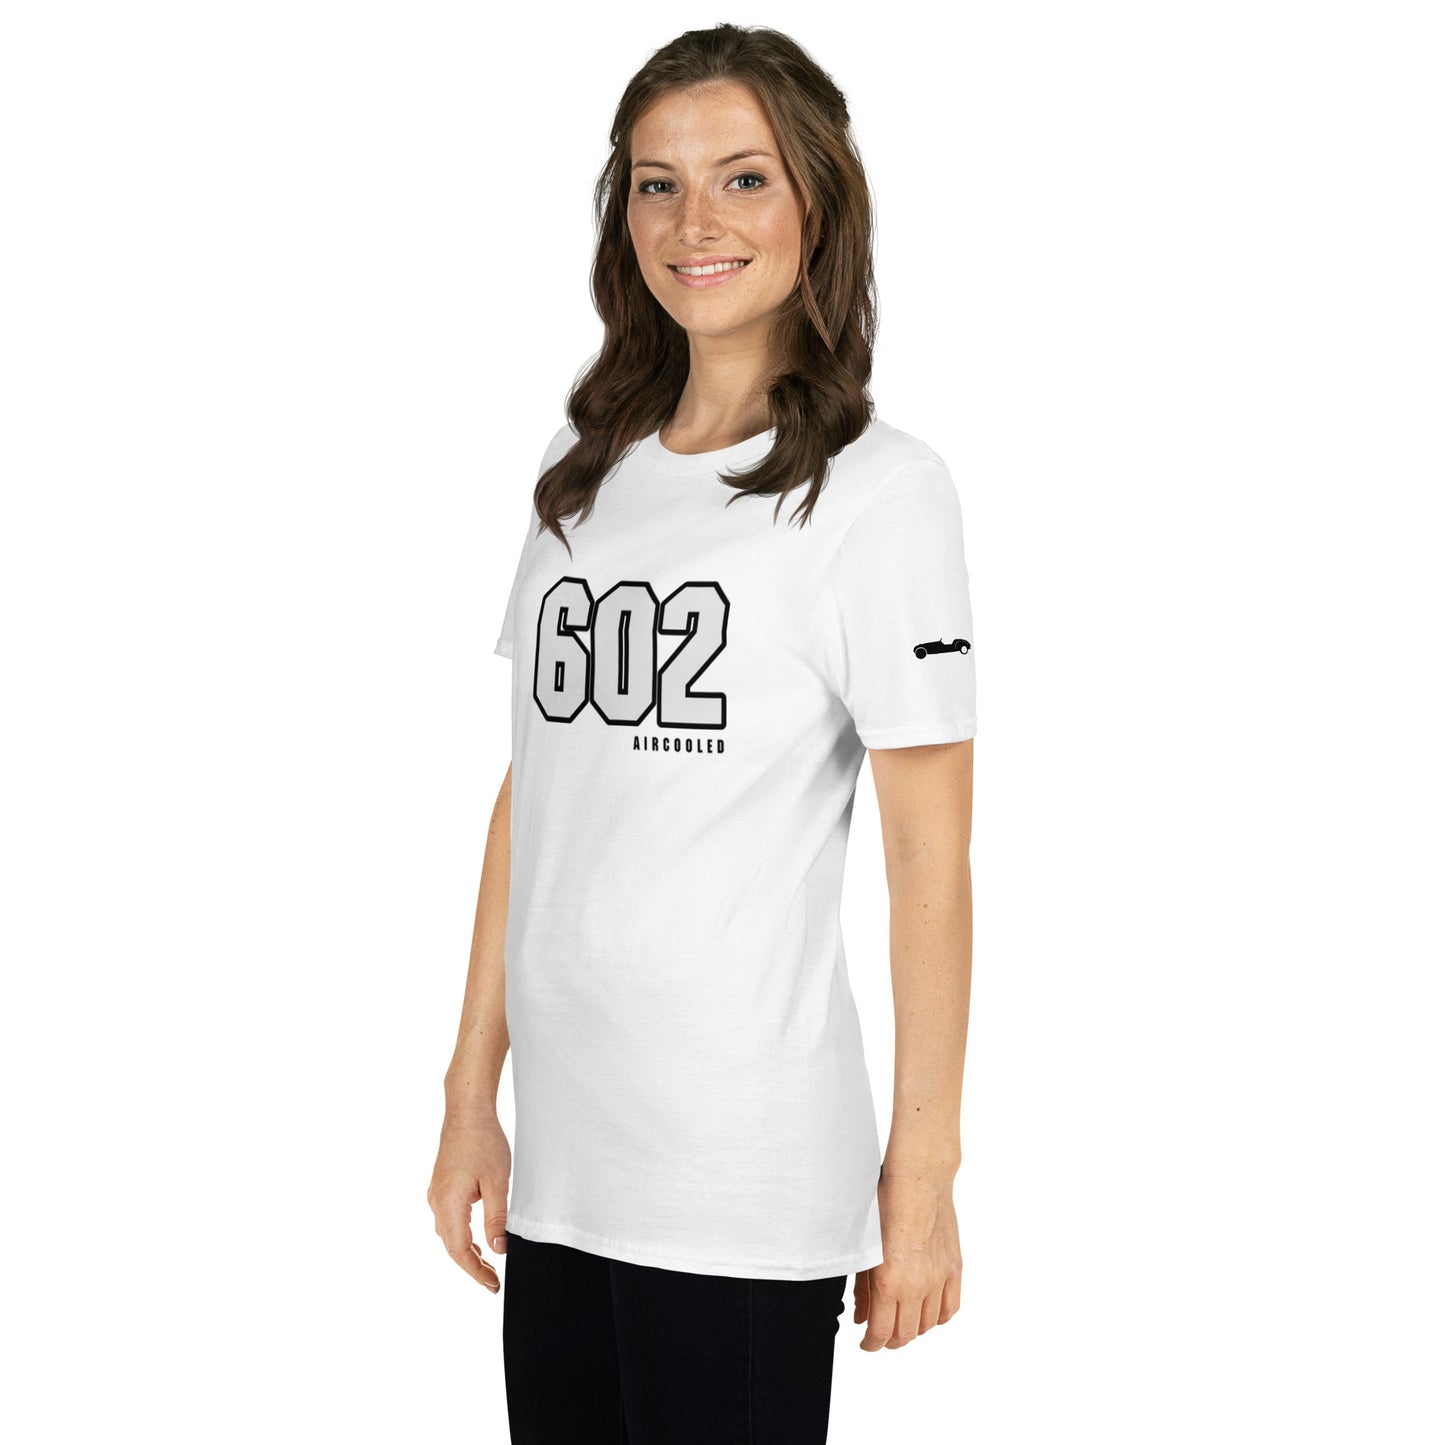 602cc Aircooled Burton Sportscar T-shirt Unisex - Gray or White